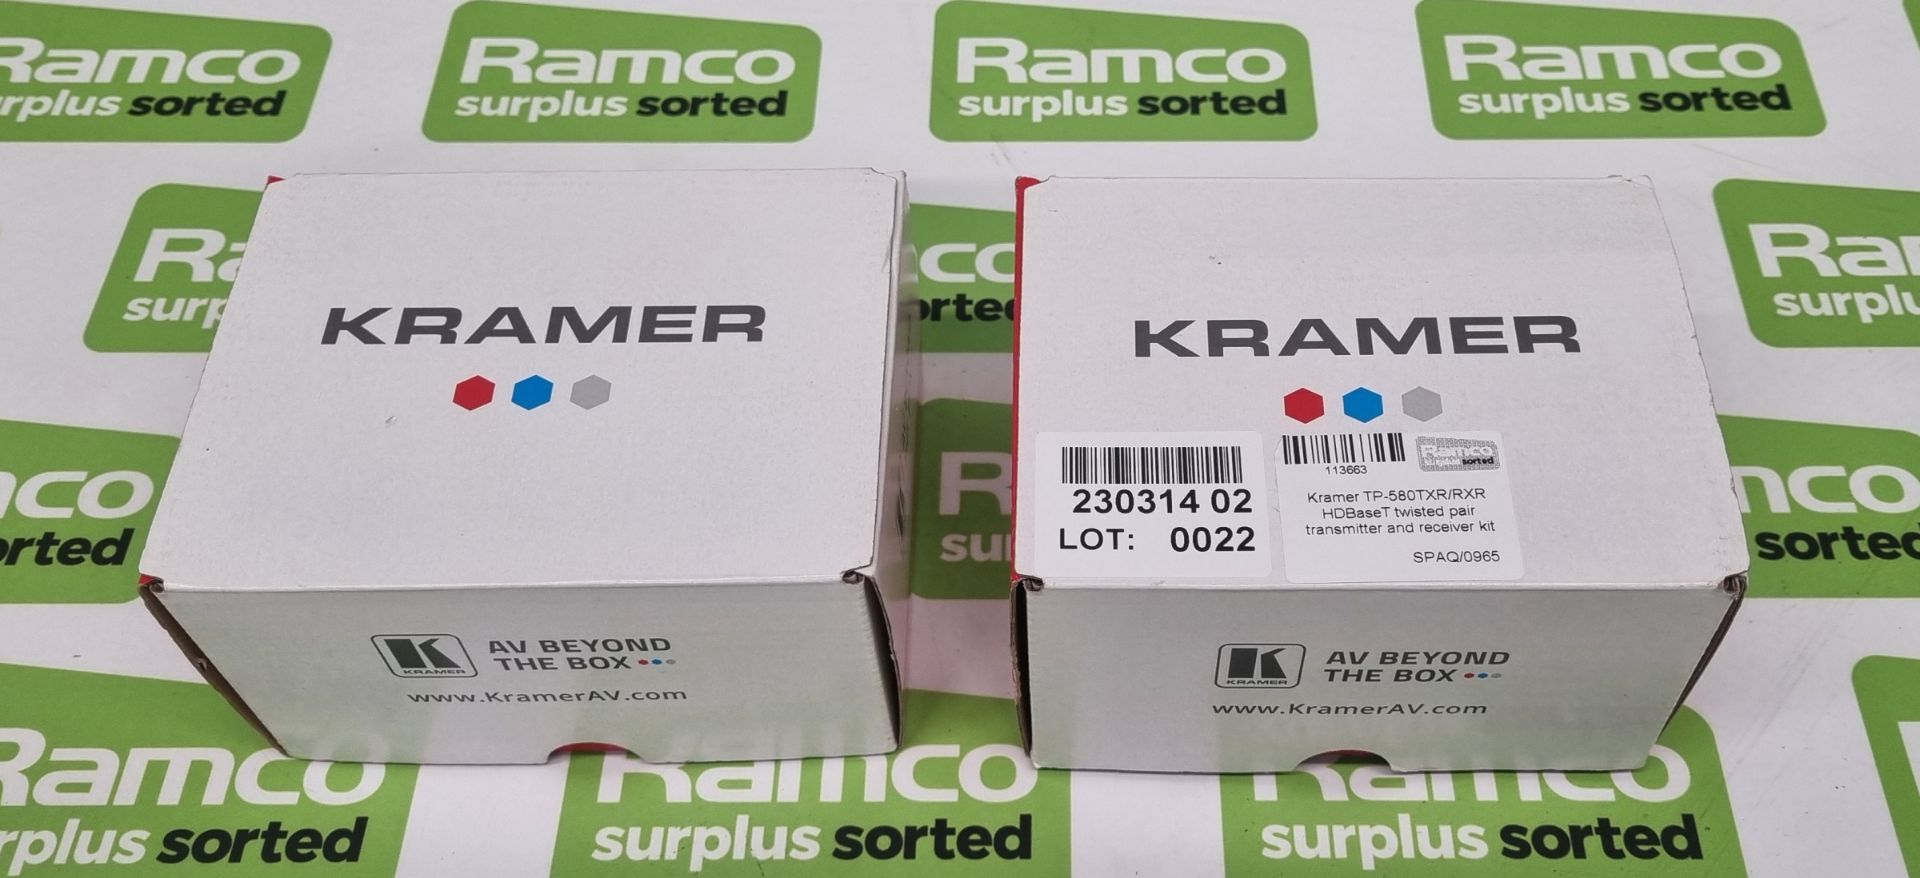 Kramer TP-580TXR/RXR HDBaseT twisted pair transmitter and receiver kit